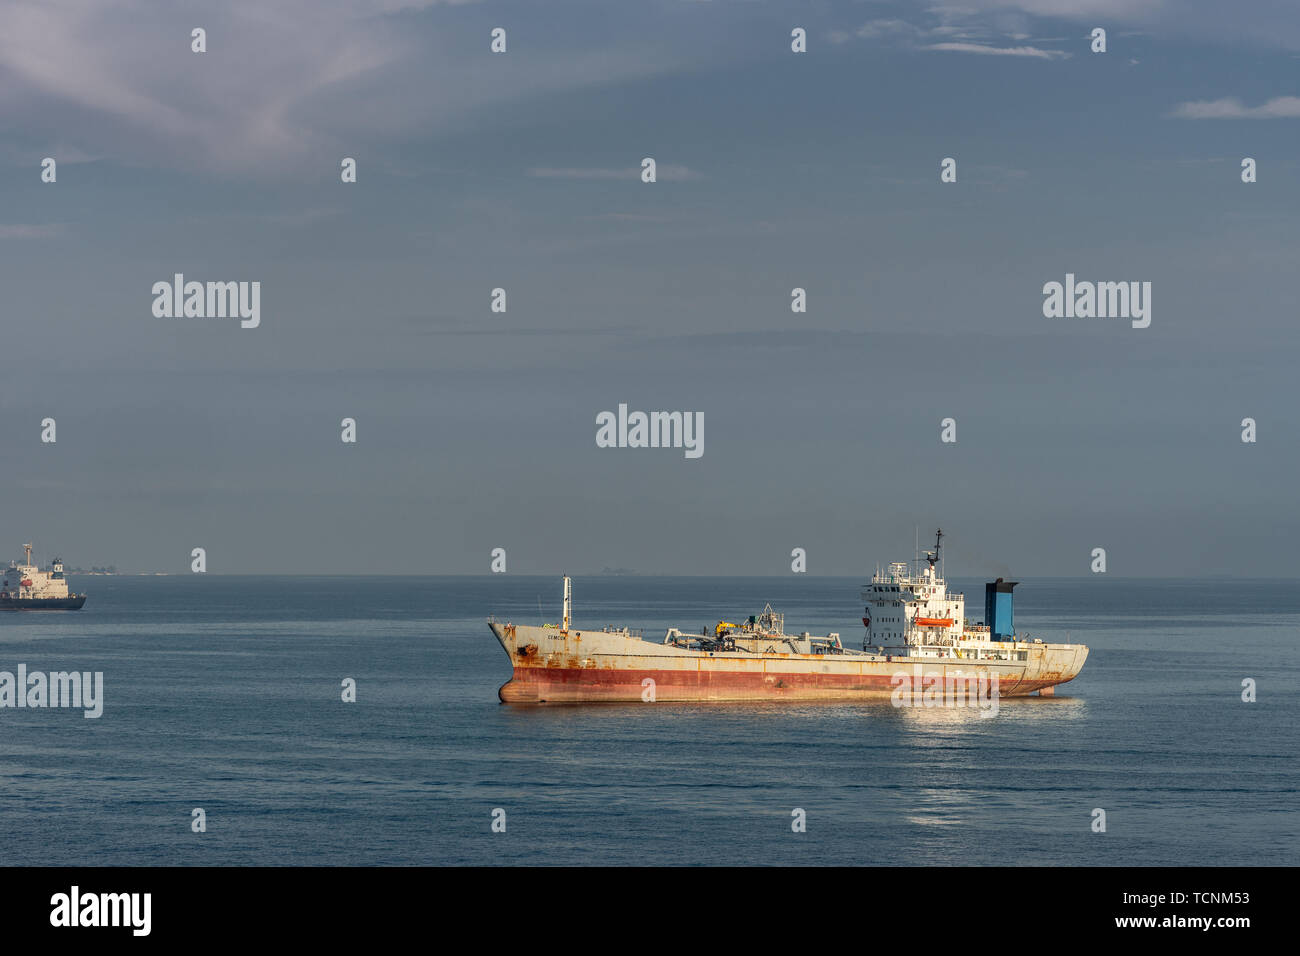 Makassar, Sulawesi, Indonesia - February 28, 2019: Rusty cement carrier Cemcon ship sails near port. Blue sea and sky. Stock Photo